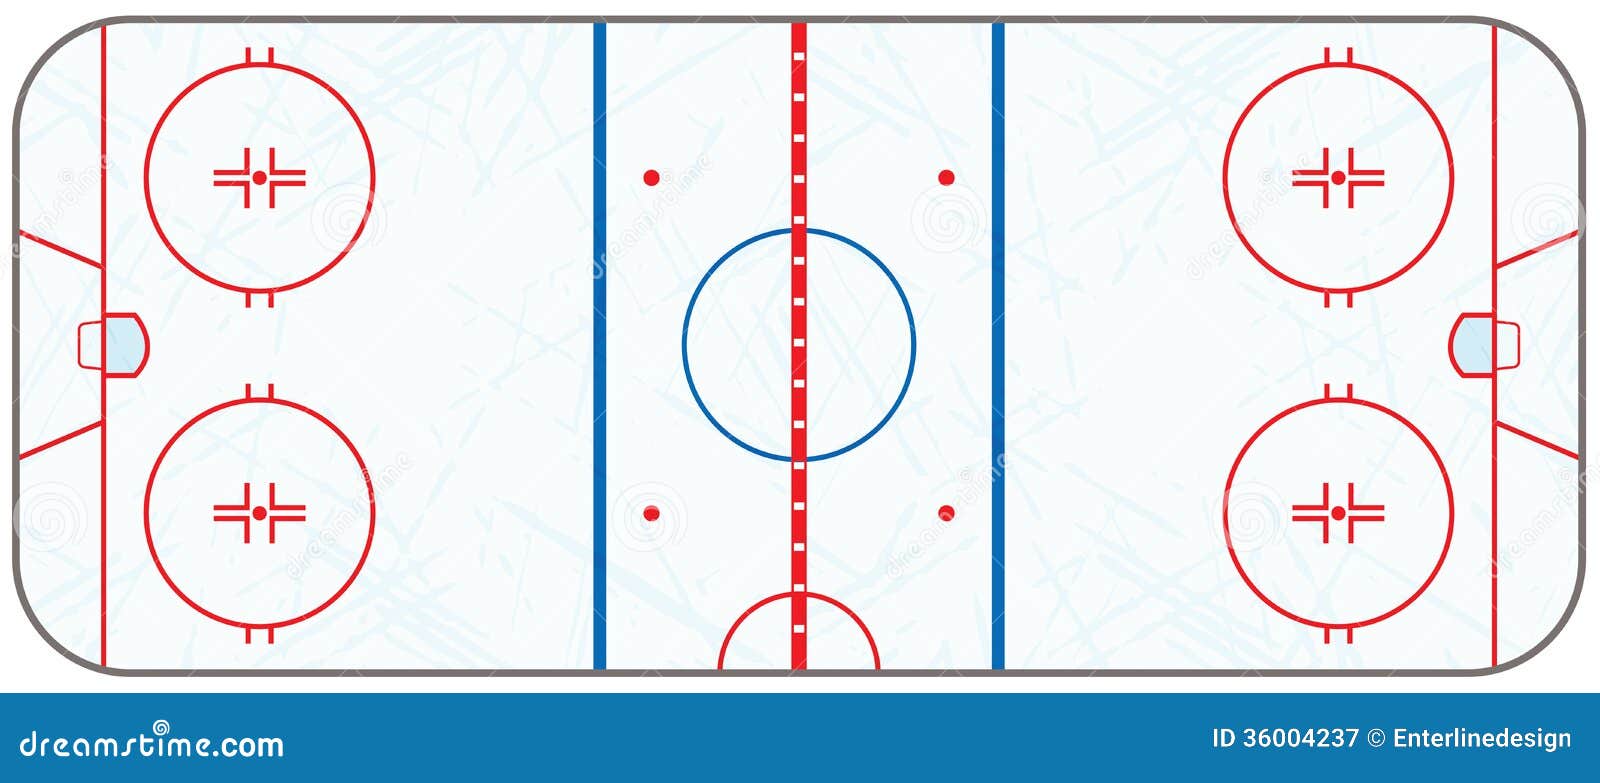 Inline hockey rink business plan